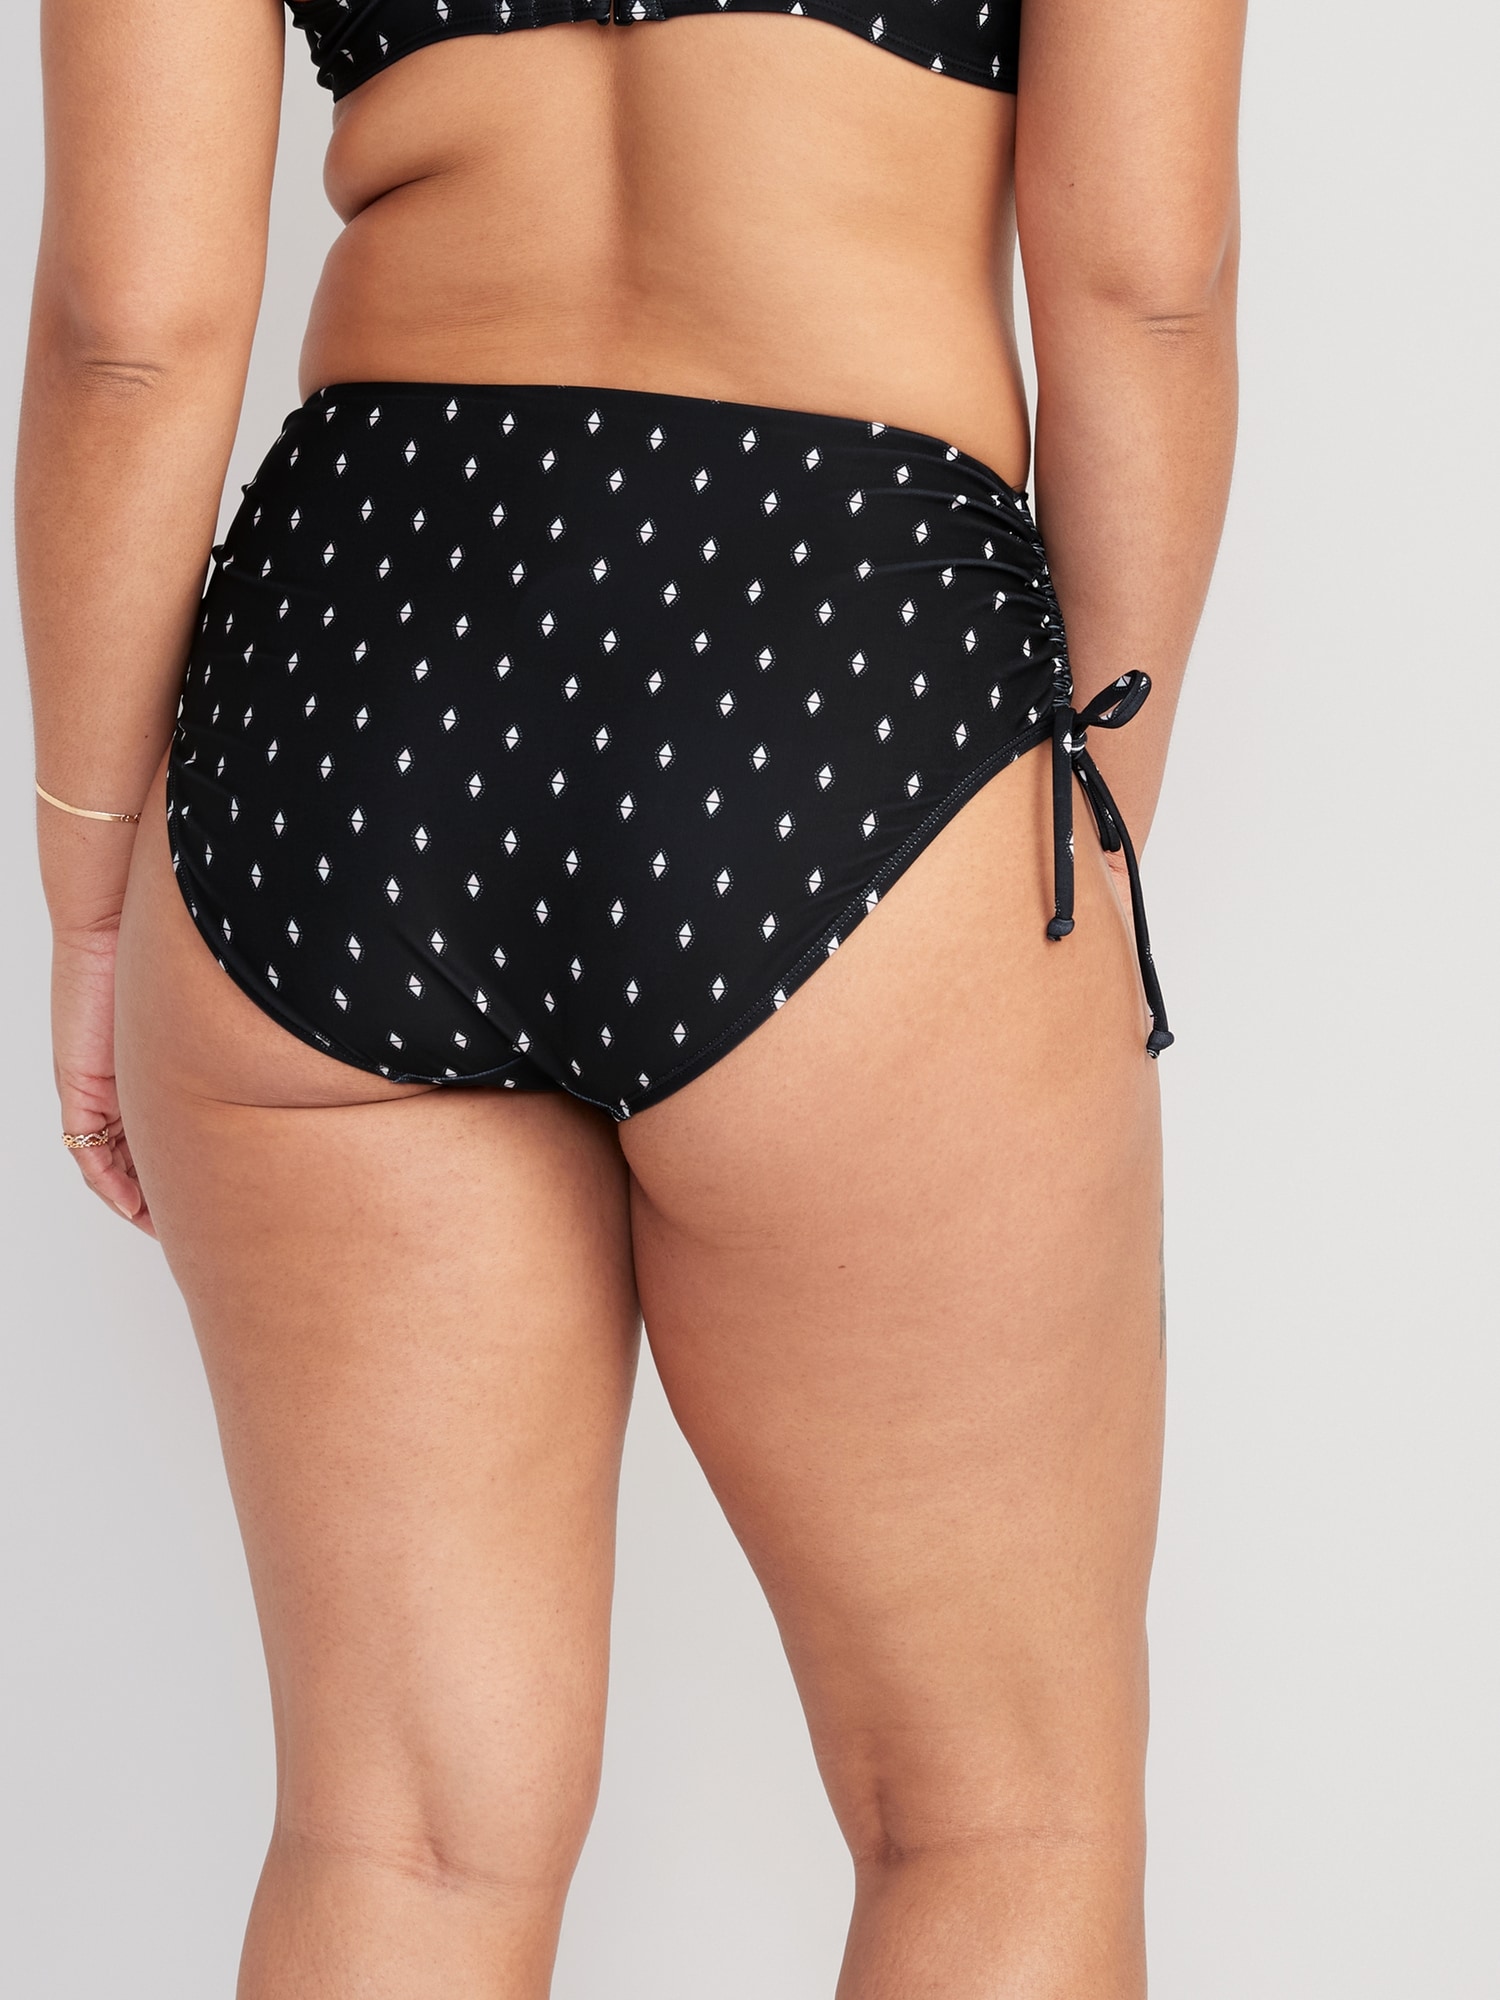 Old Navy Women’s White and Black Dotted Tie-Strap Bikini Swim Top XL